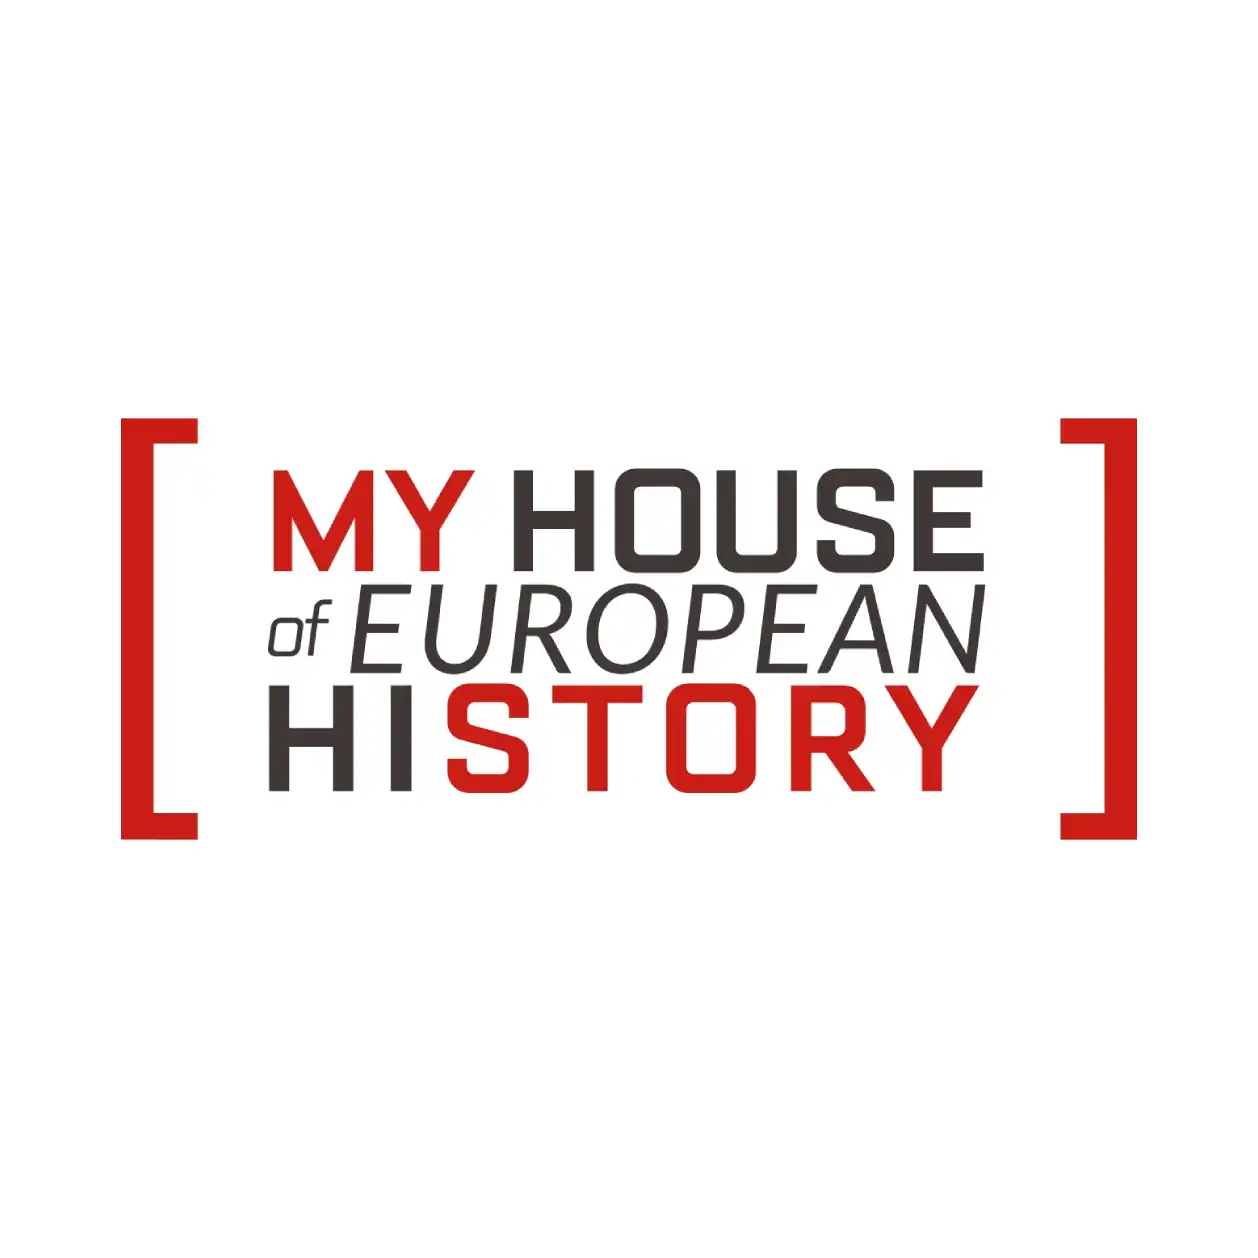 My House of European History